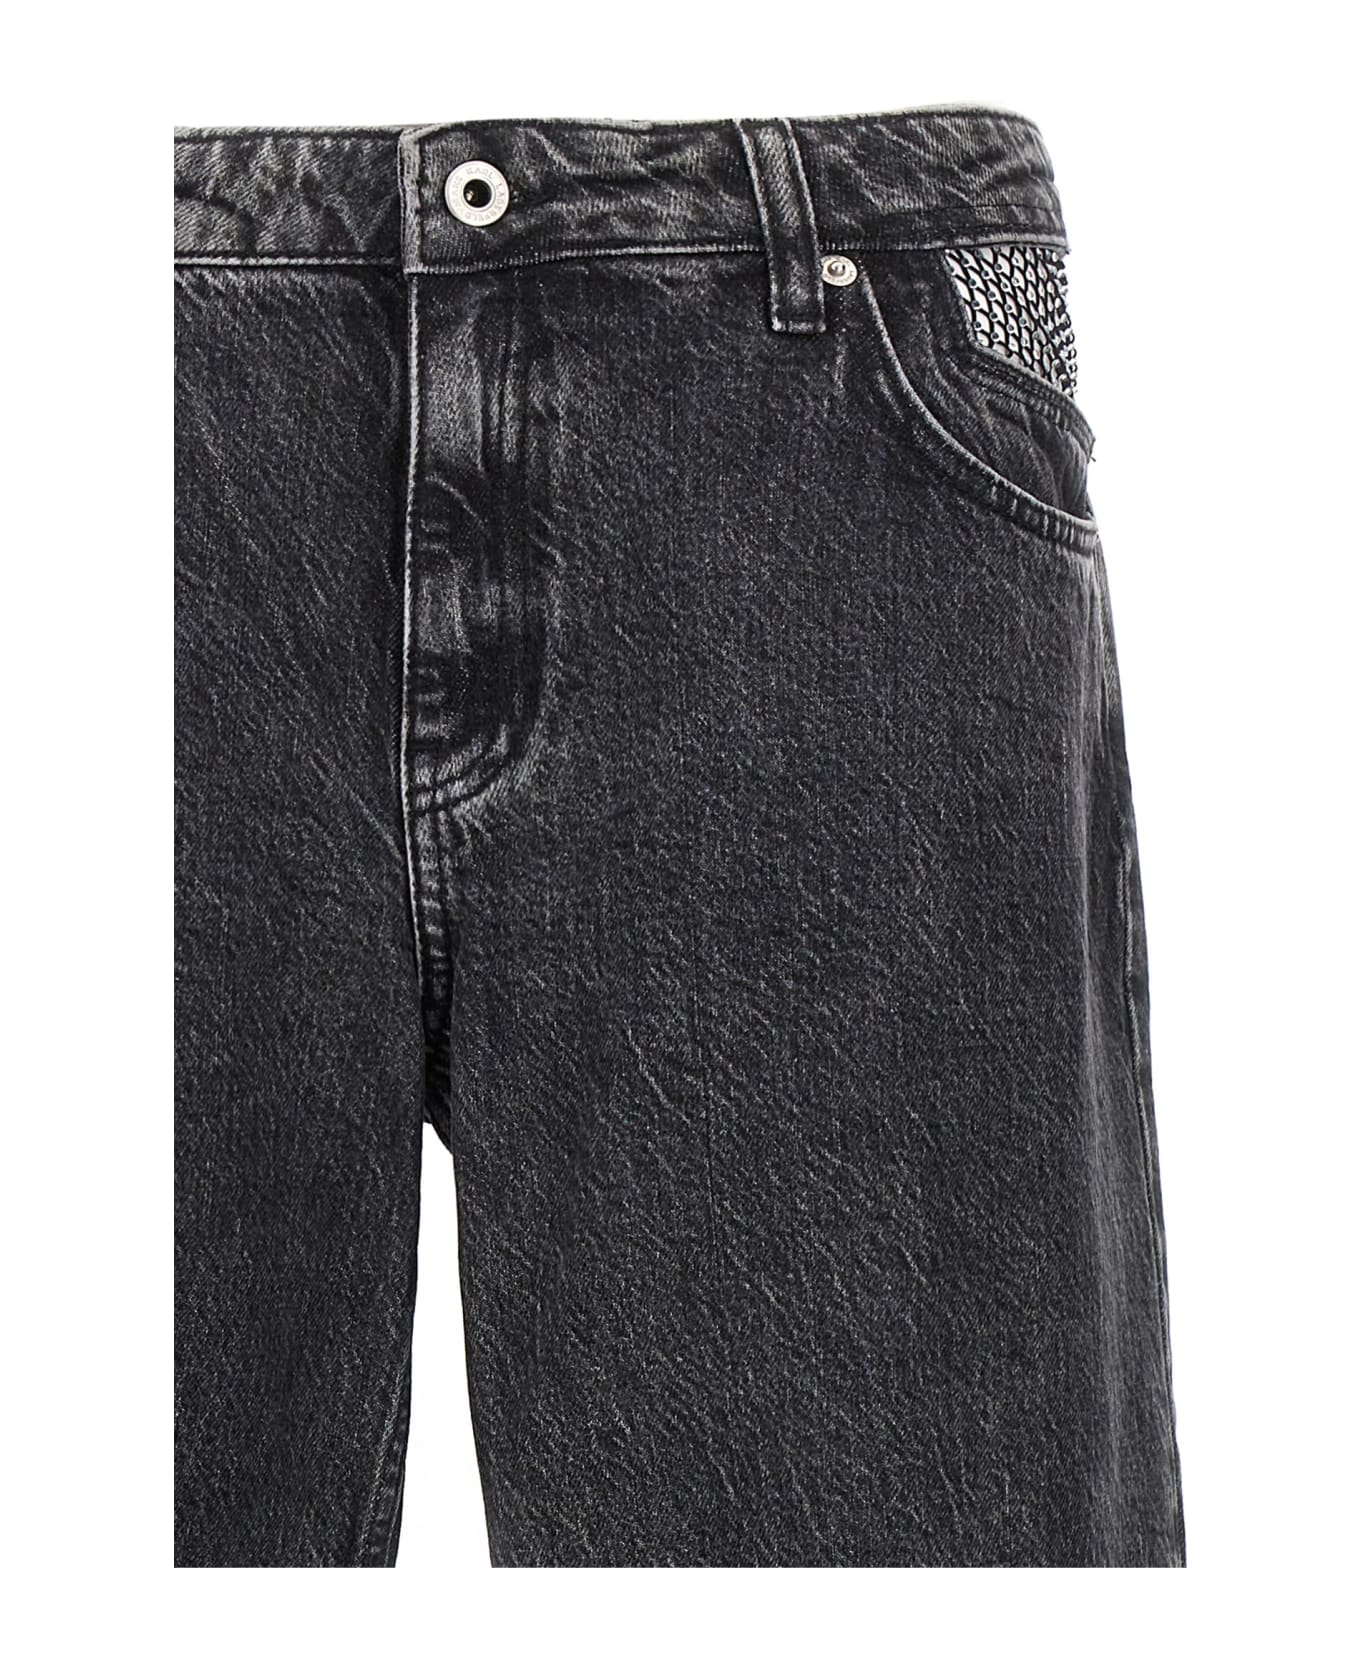 Karl Lagerfeld Rhinestone Detail Jeans - Black  